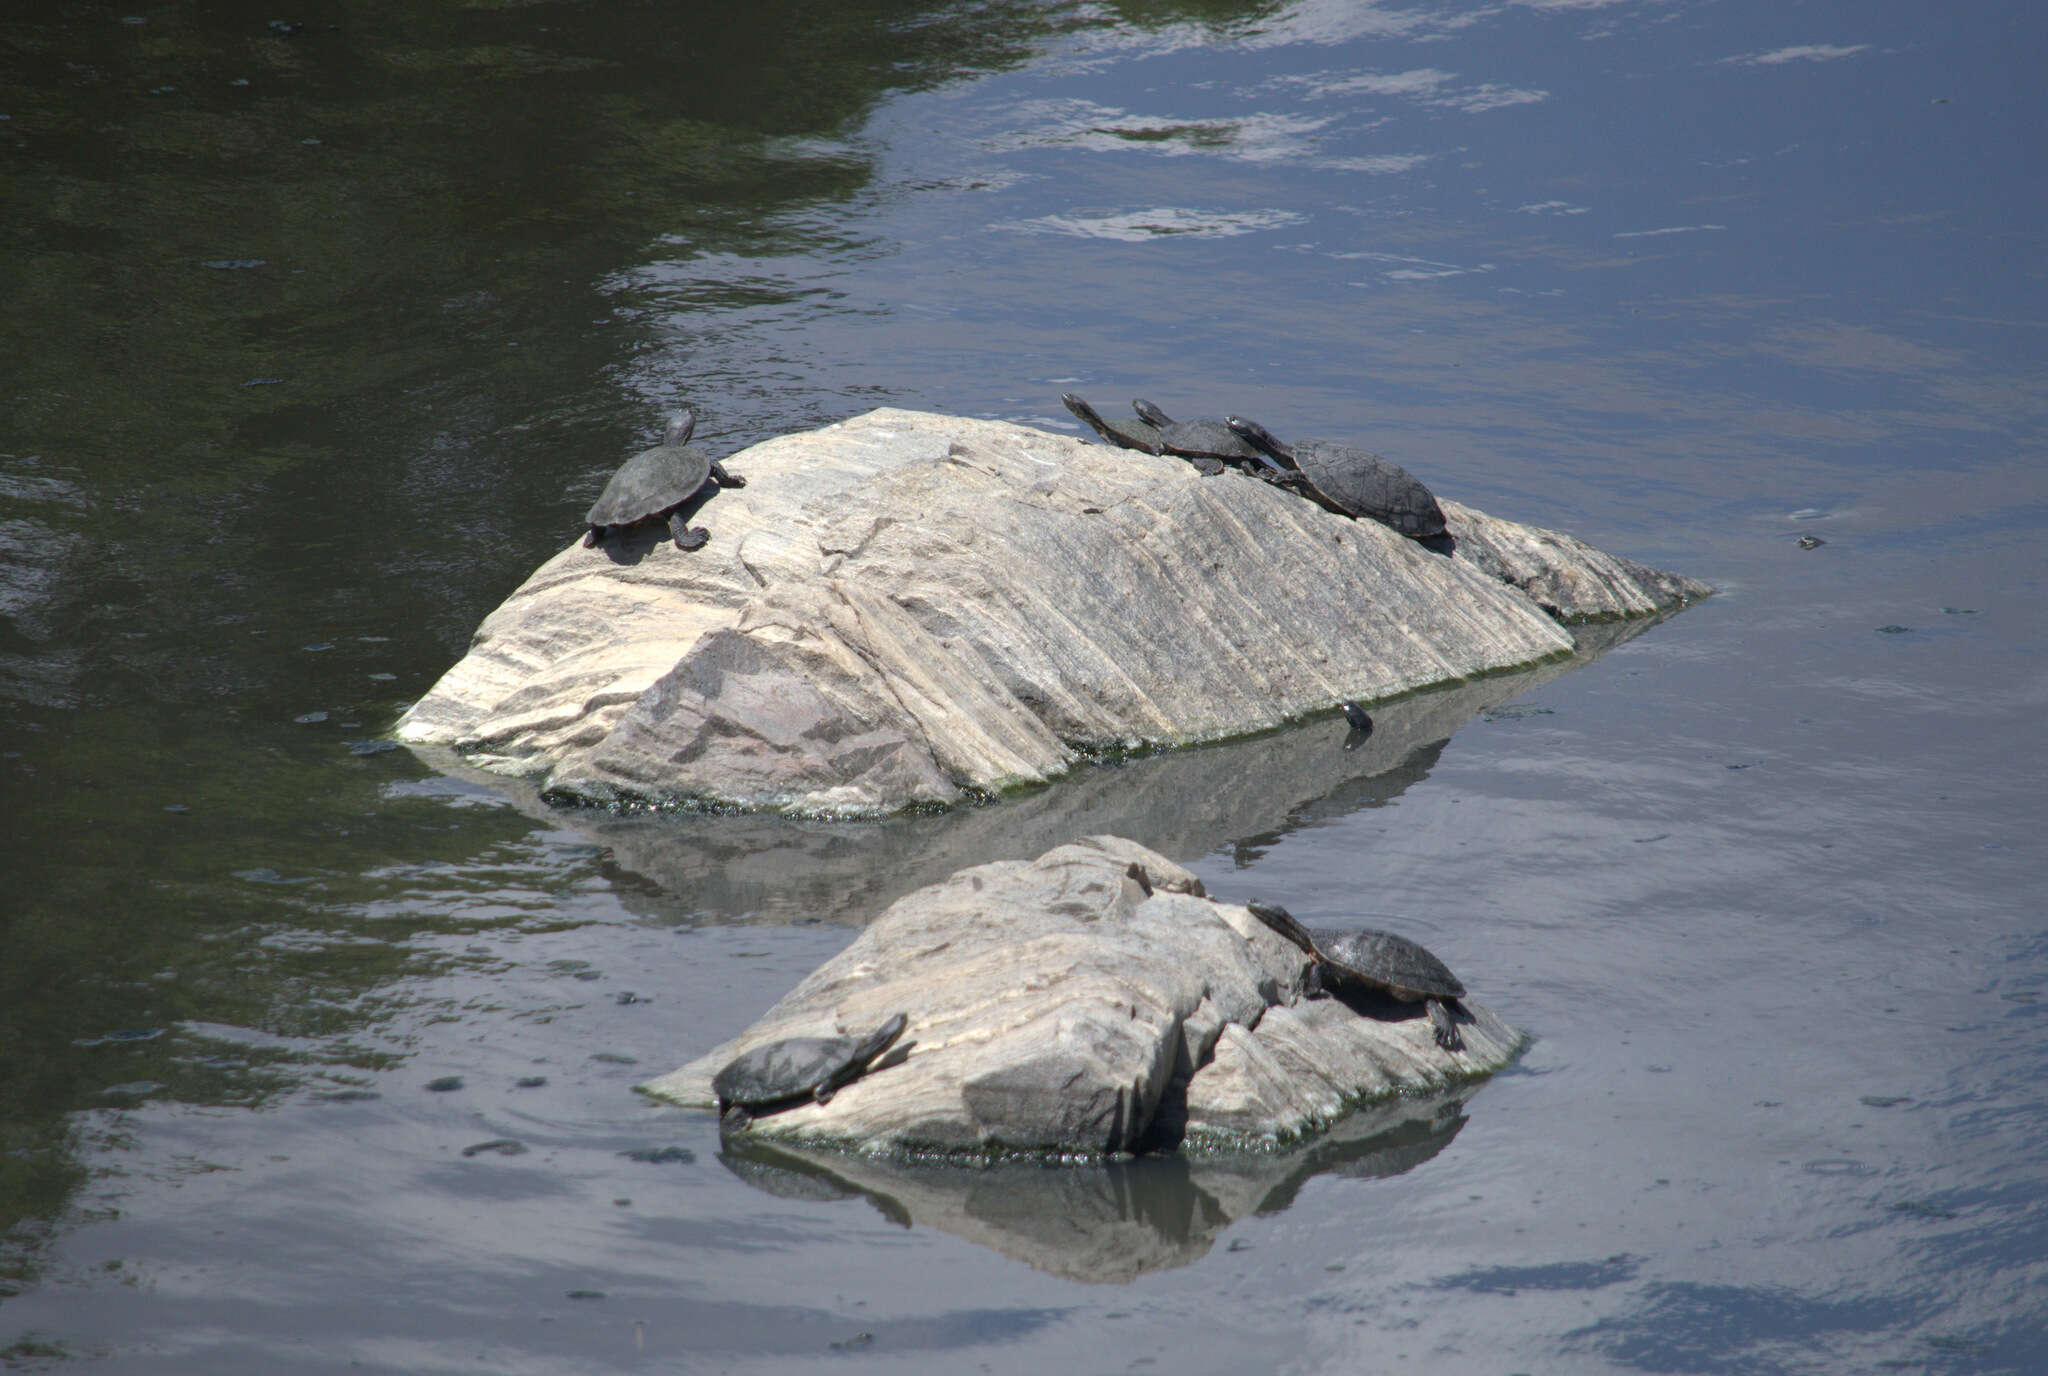 Image of Cotinga River Toadhead Turtle